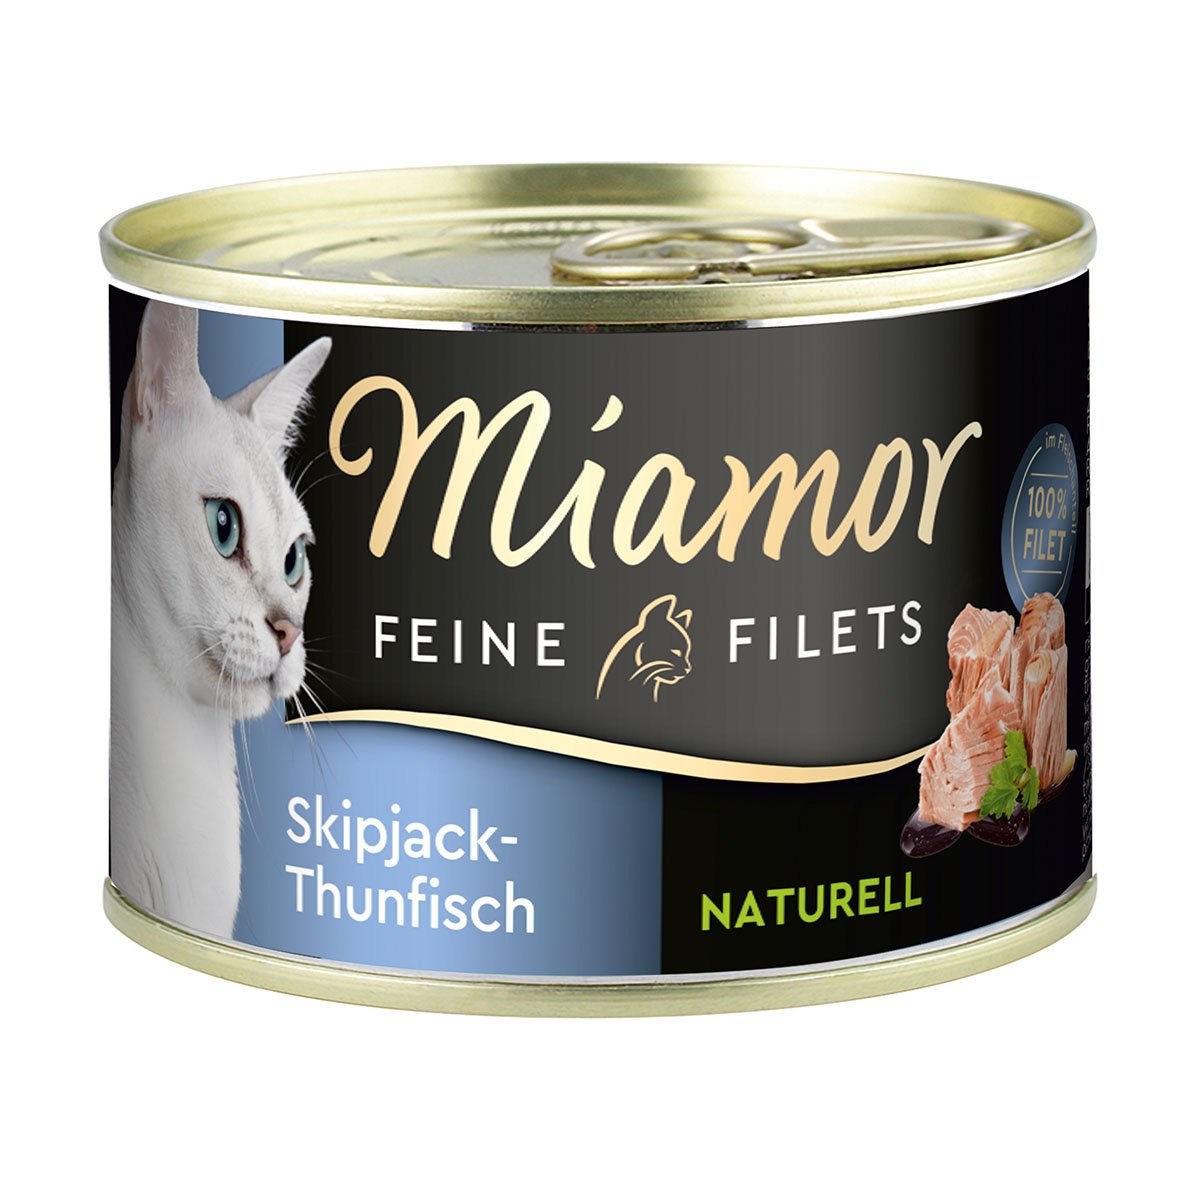 Miamor Feine Filets Naturelle Skipjack-Thunfisch 156g Dose 24x156g